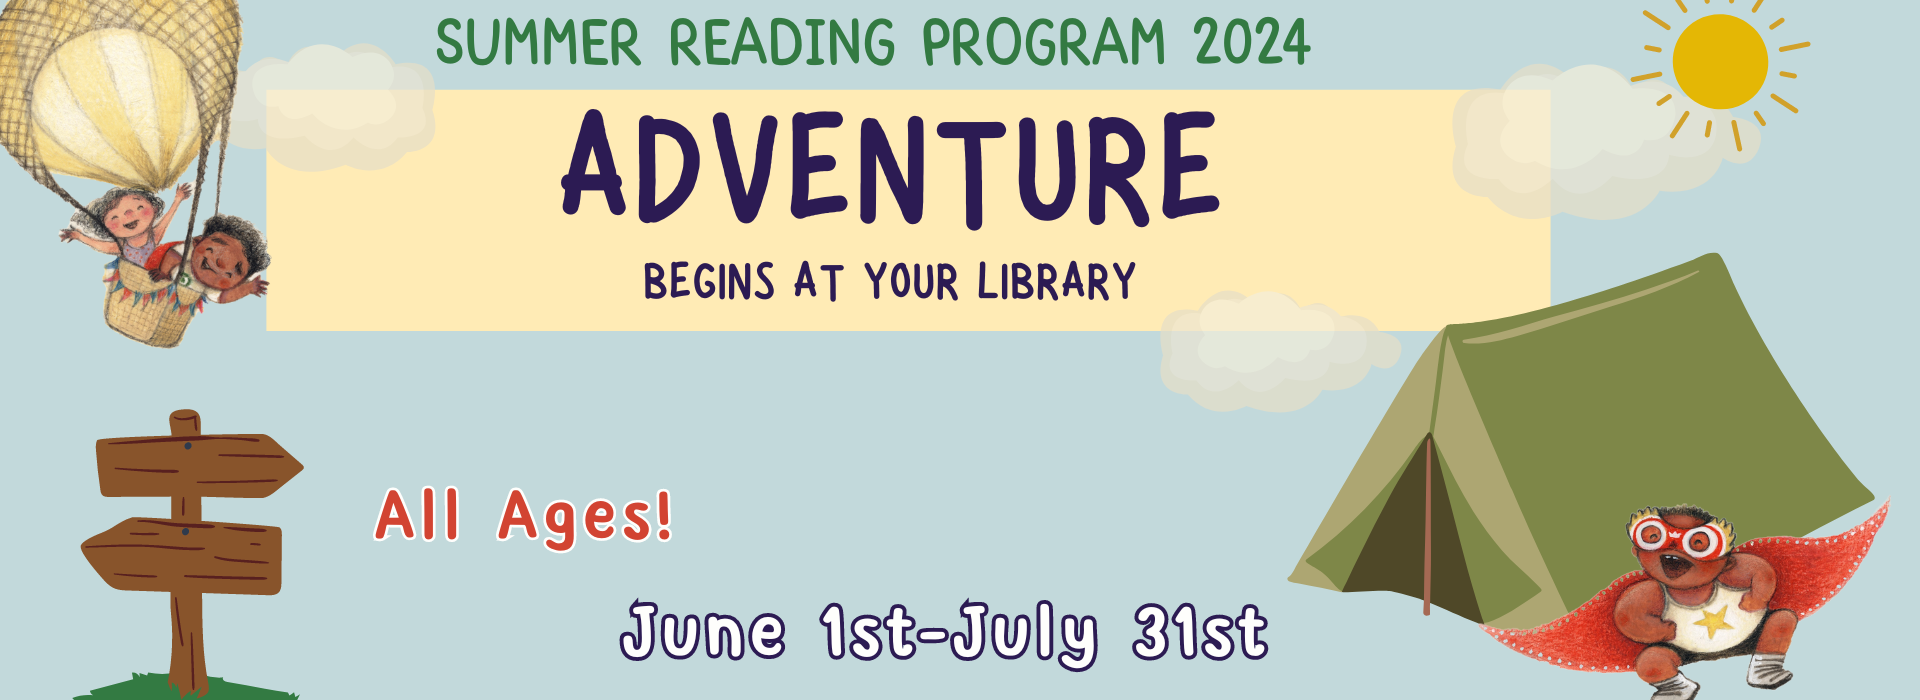 Summer Reading Program starts June 1st and ends July 31st